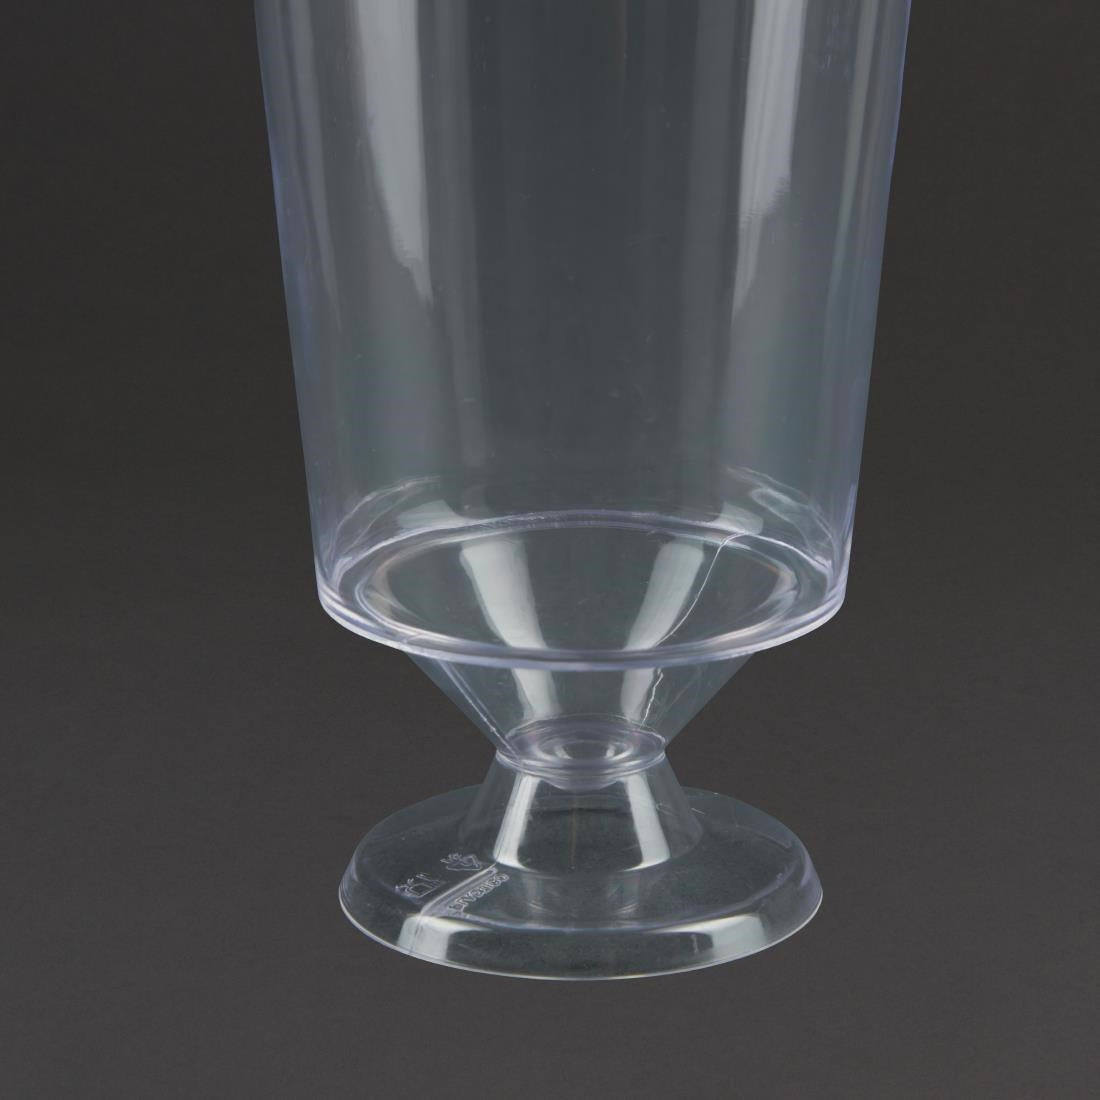 T644 Plastico Disposable Wine Glasses 175ml (Pack of 10)